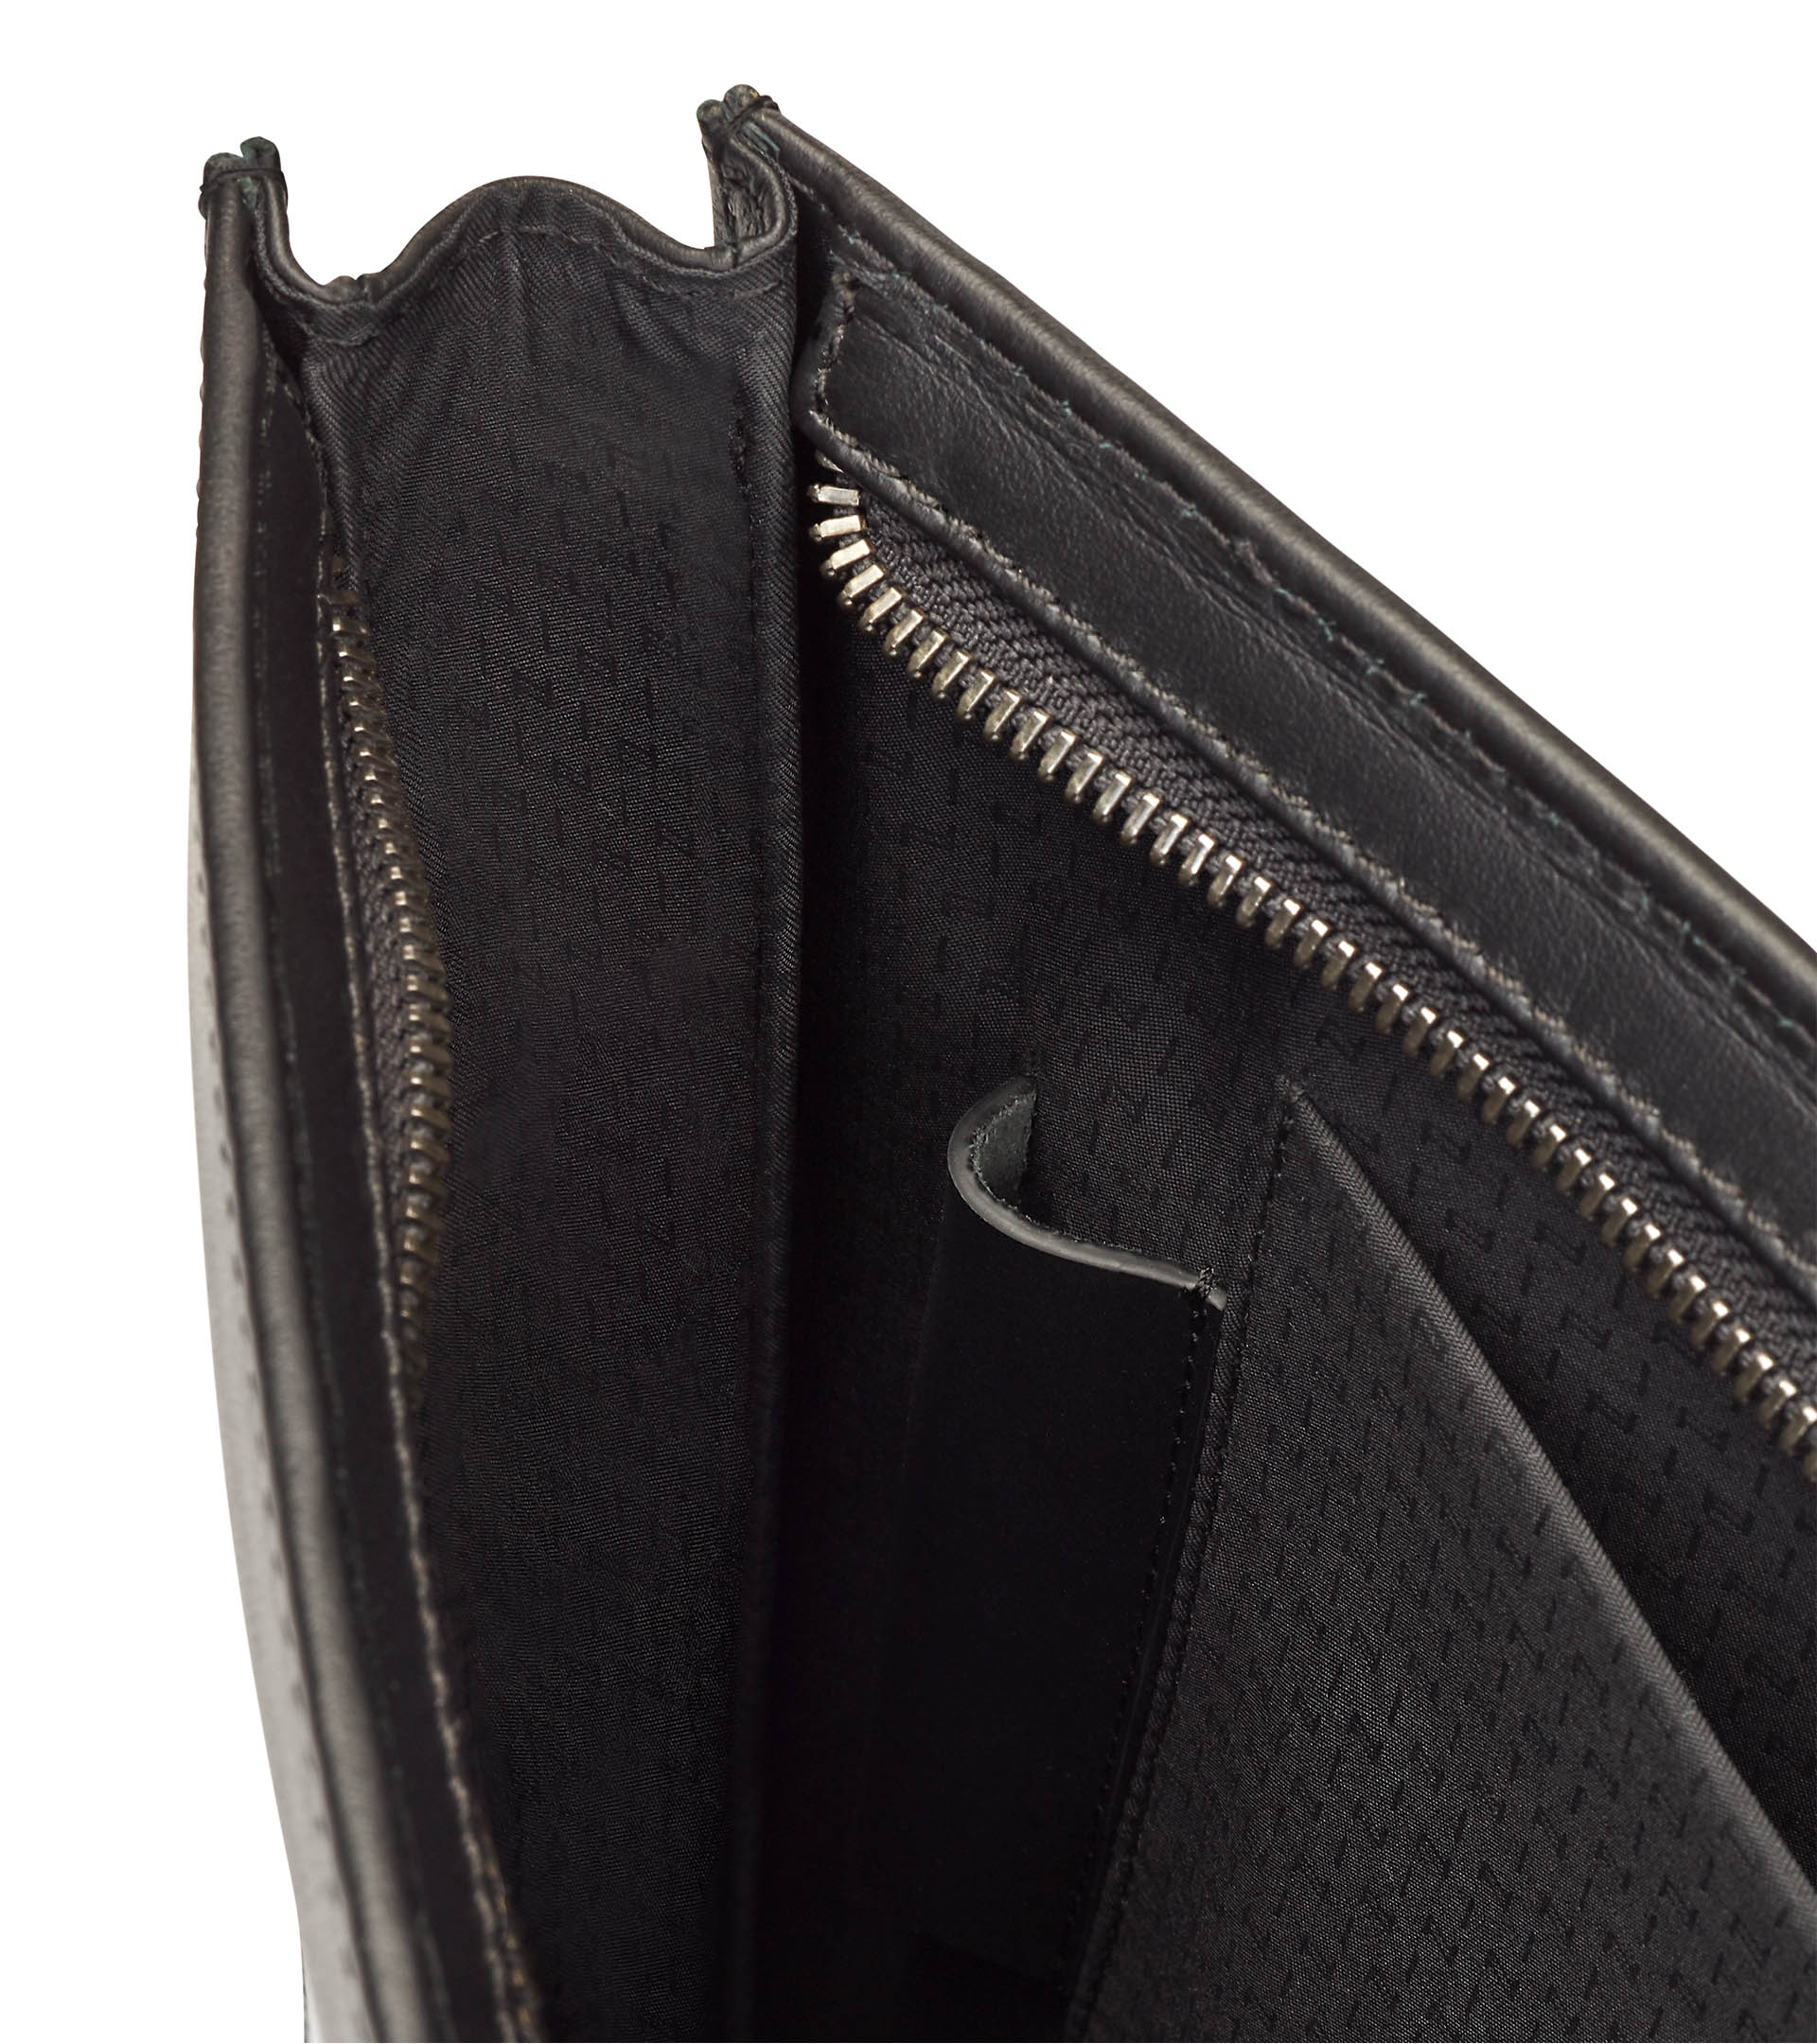 Carbon Notebook Sleeve - Luxury Business Bags for Men | Porsche Design ...